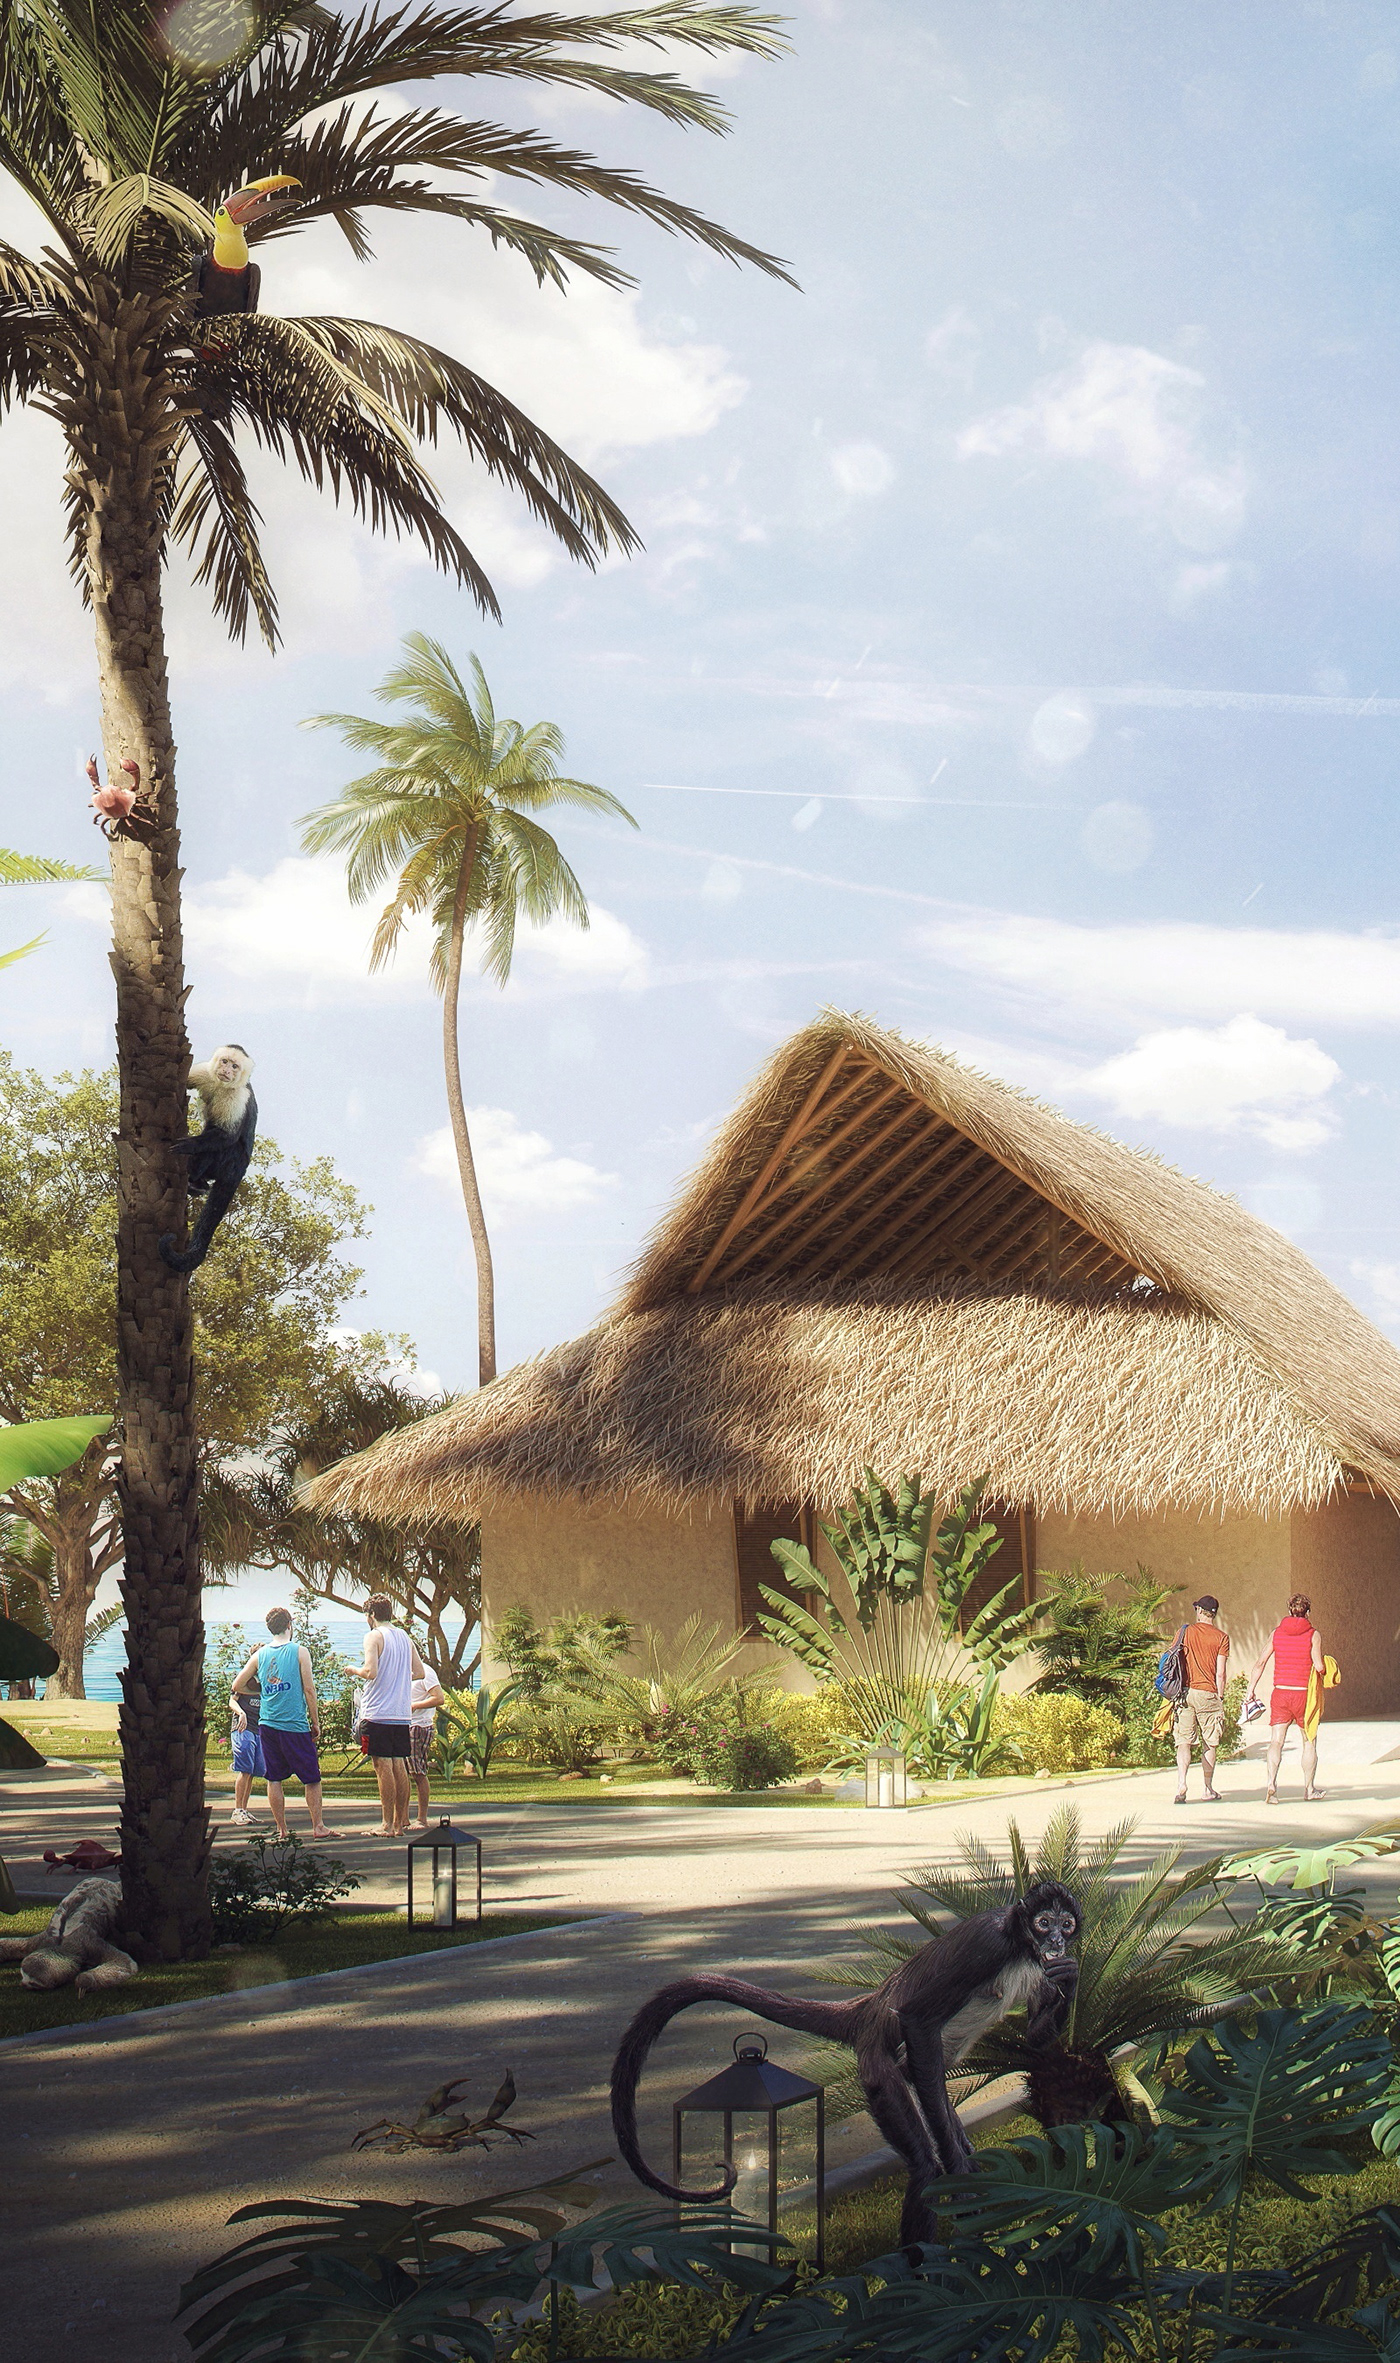 panama beach Tropical club house archviz Render kokuye exterior Nature